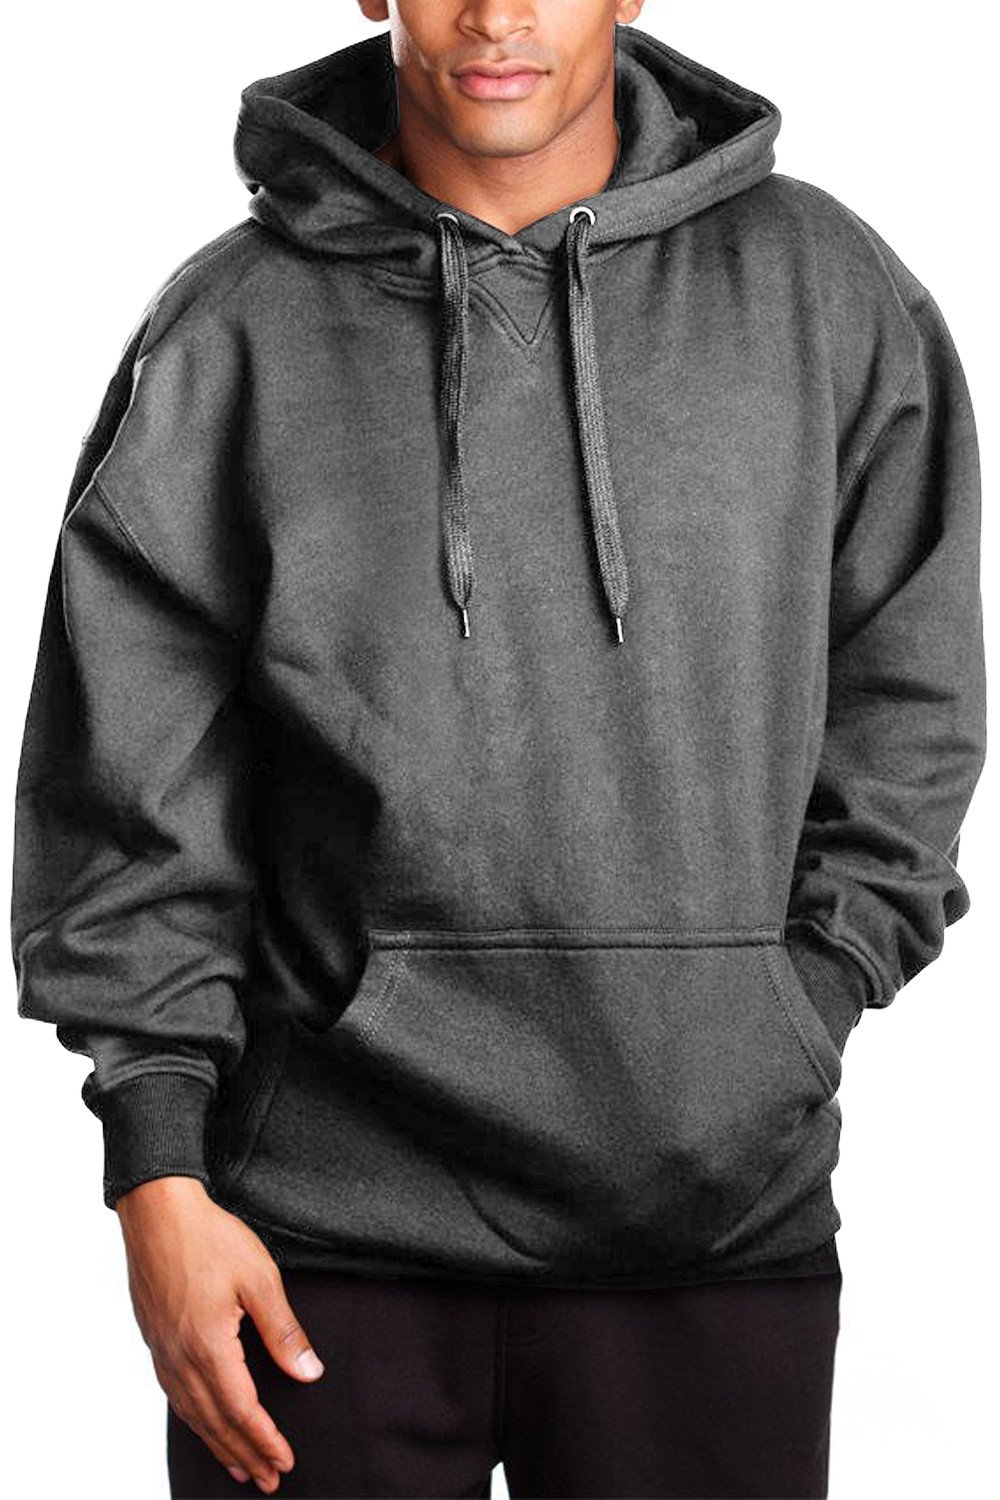 Top of the World Mens Dark Charcoal Gray Hoodie Sweatshirt